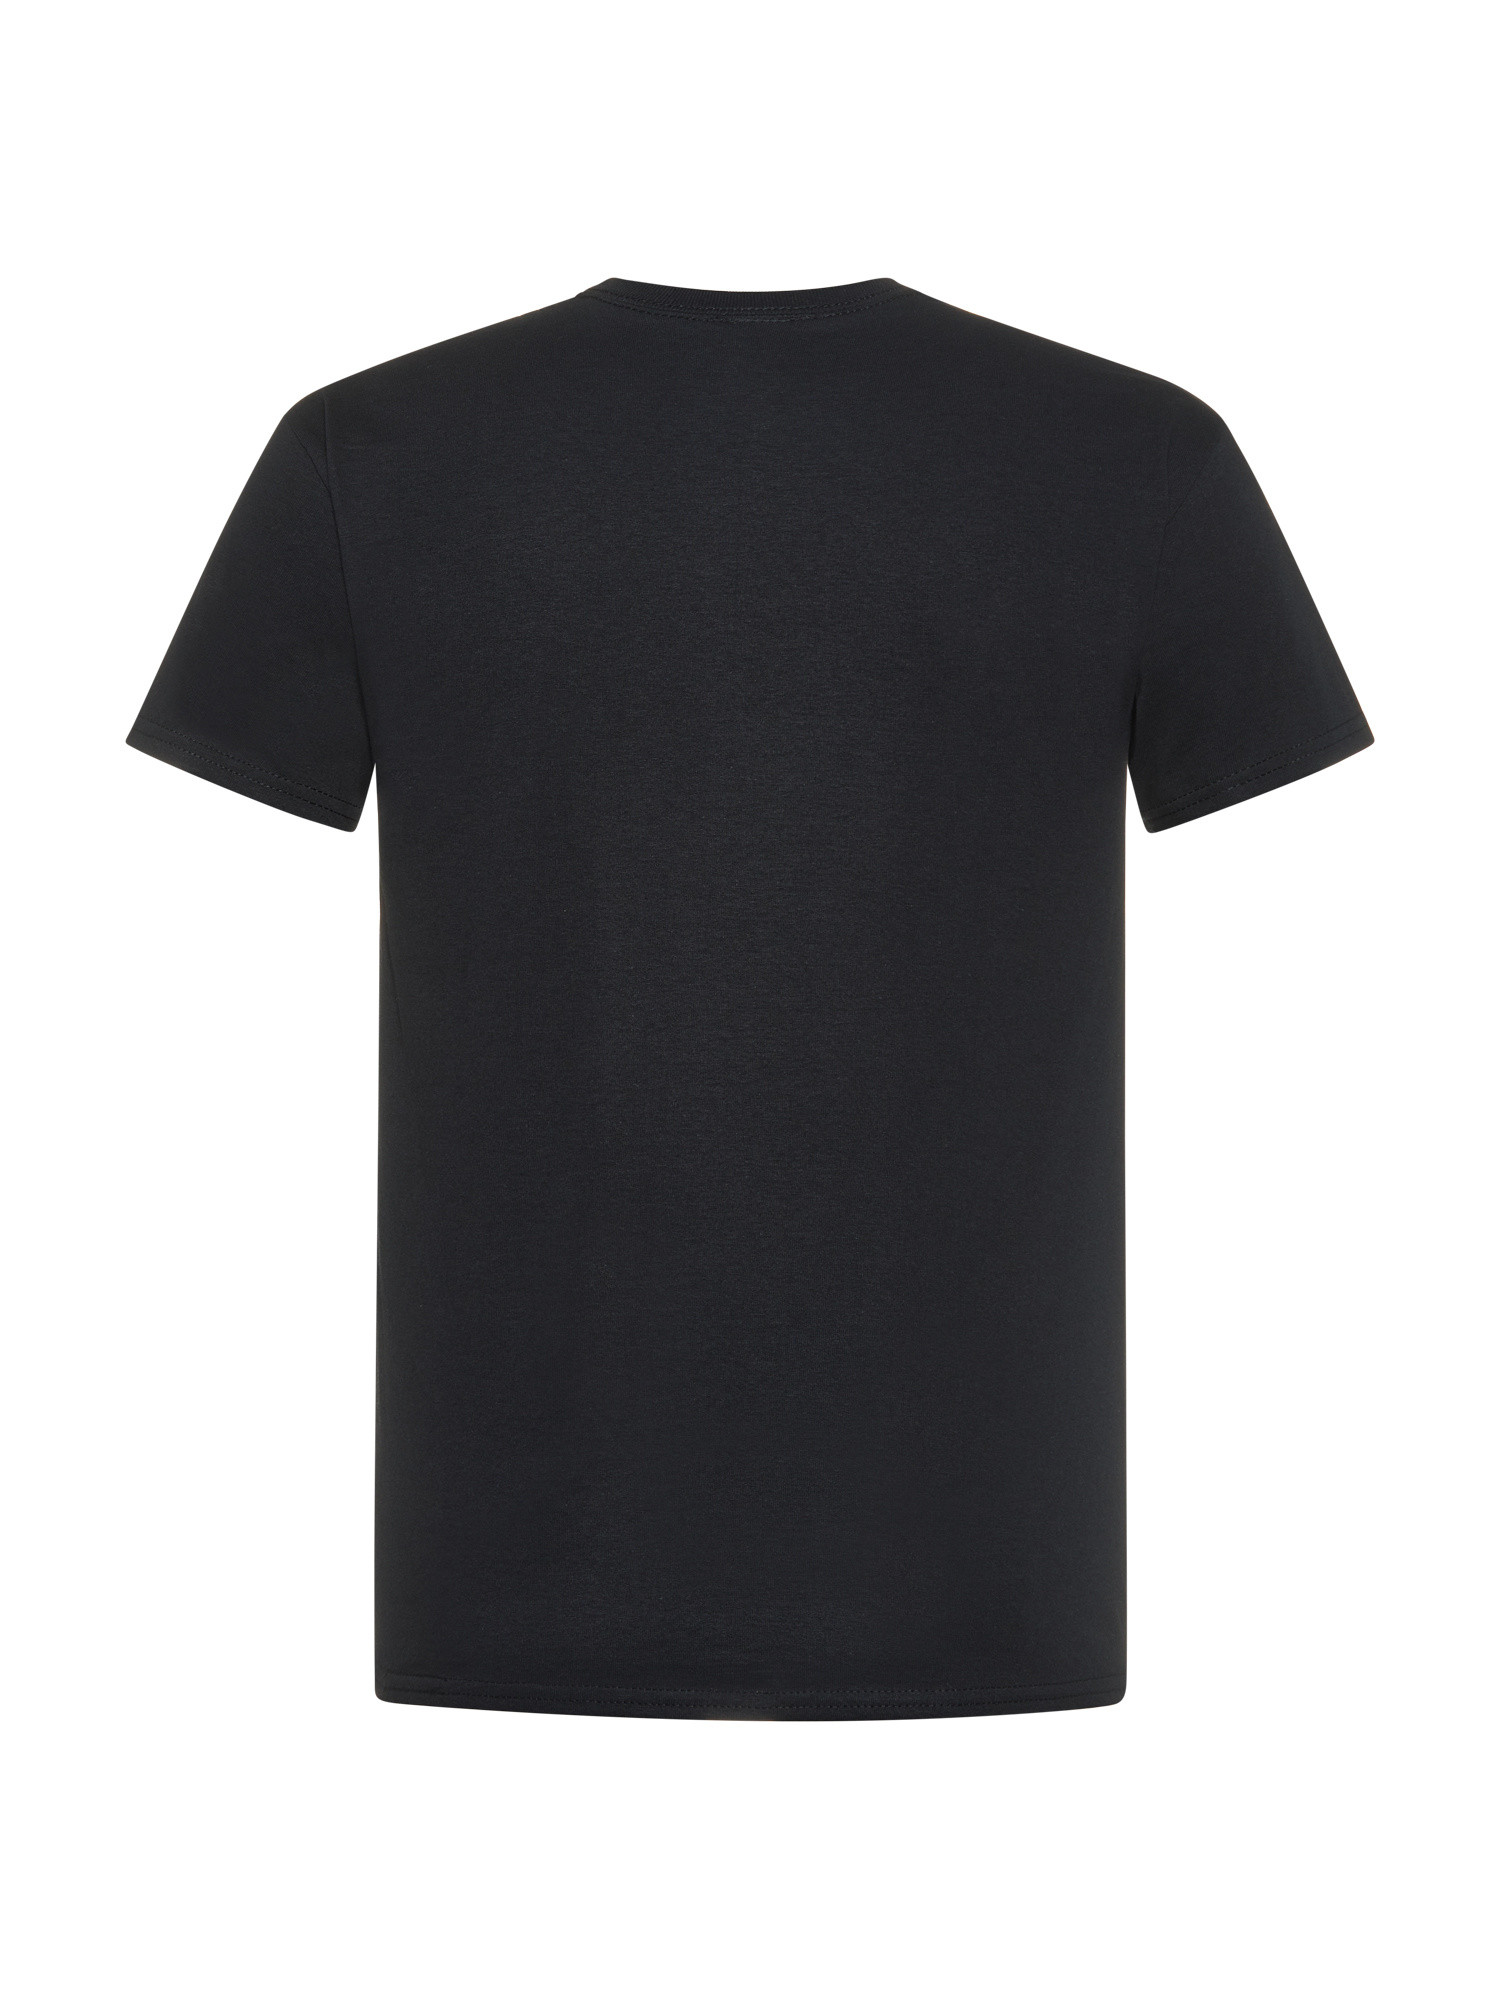 Thrasher - T-Shirt with outlined logo, Black, large image number 1